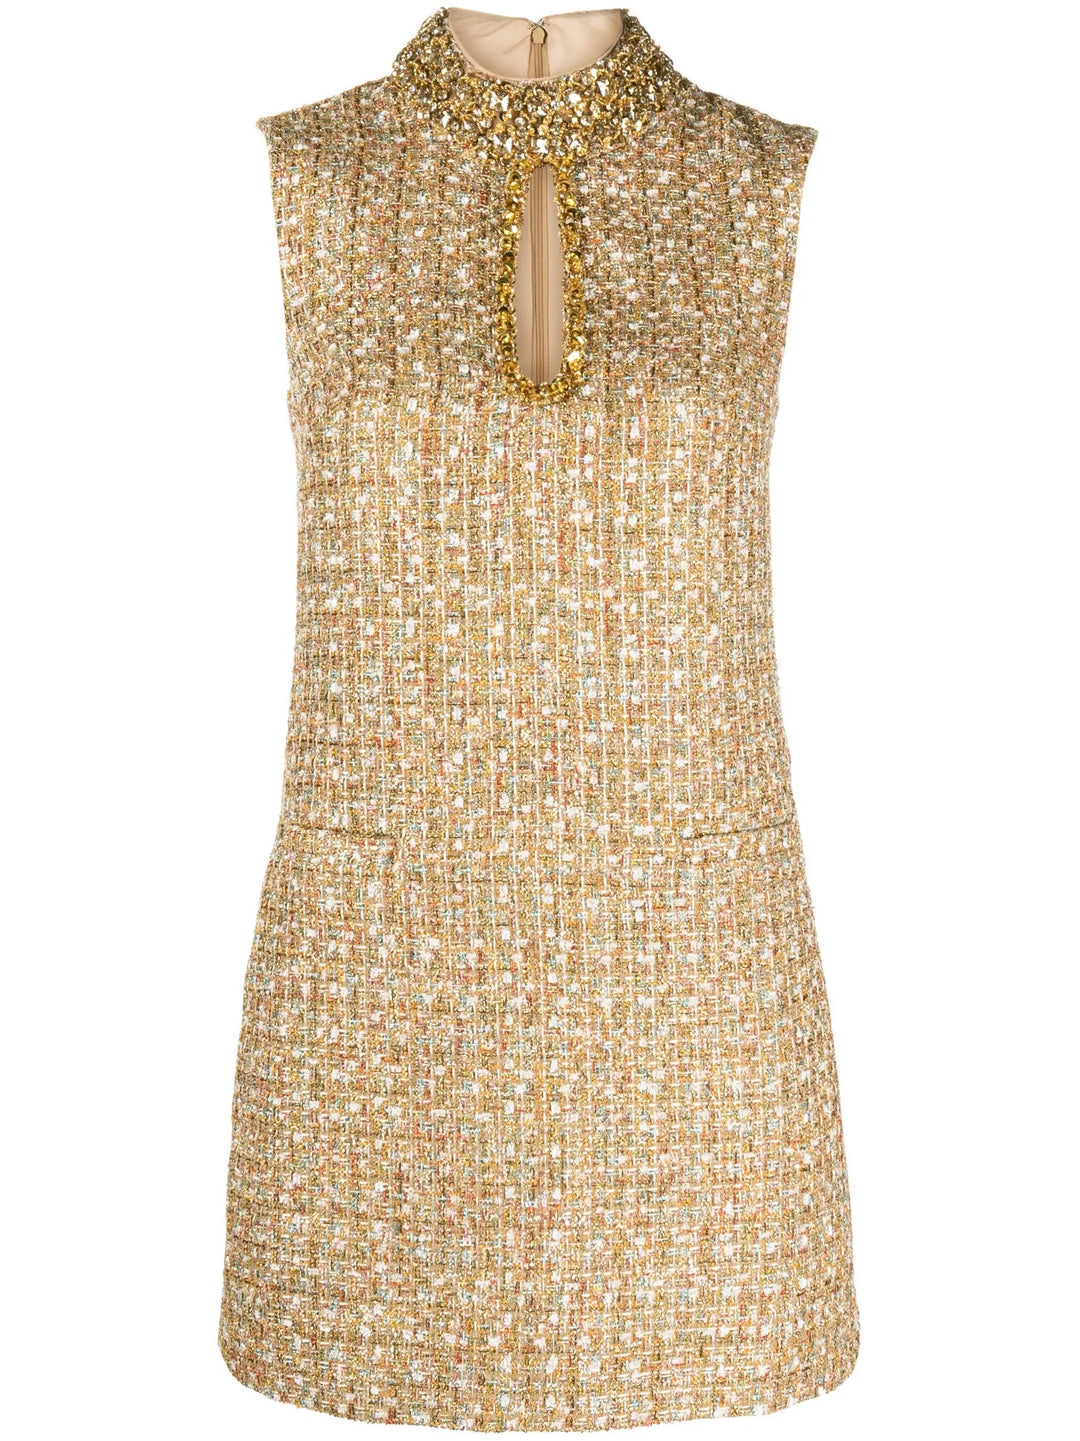 CNY Gold Tinsel Boucle Dress